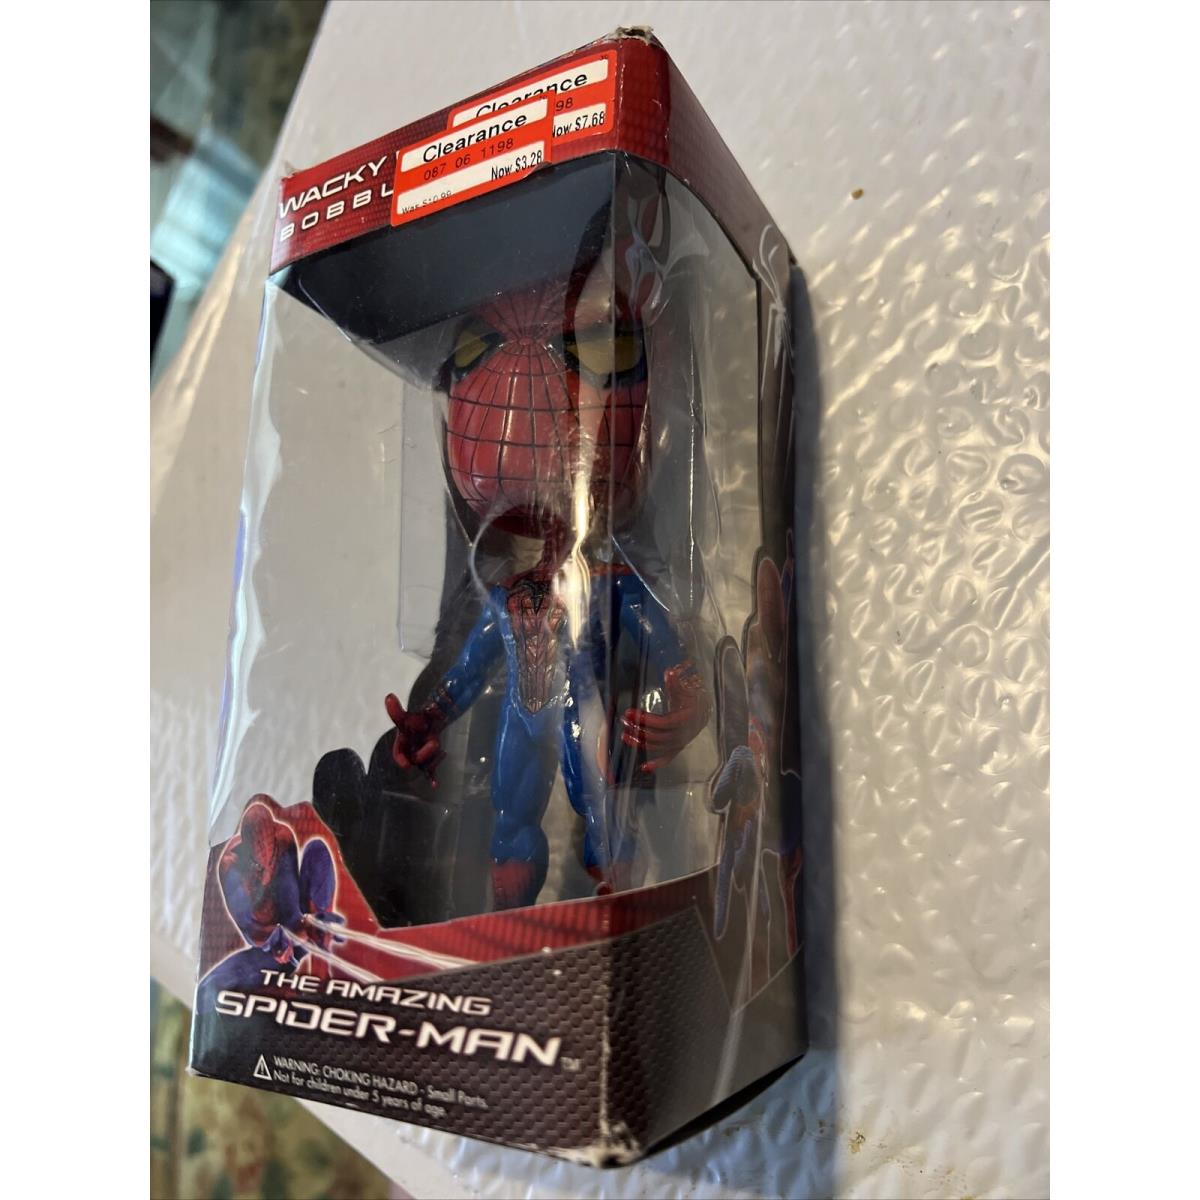 Funko Wacky Wobbler Marvel Amazing Spider-man Bobble-head Toy Box Has Wear